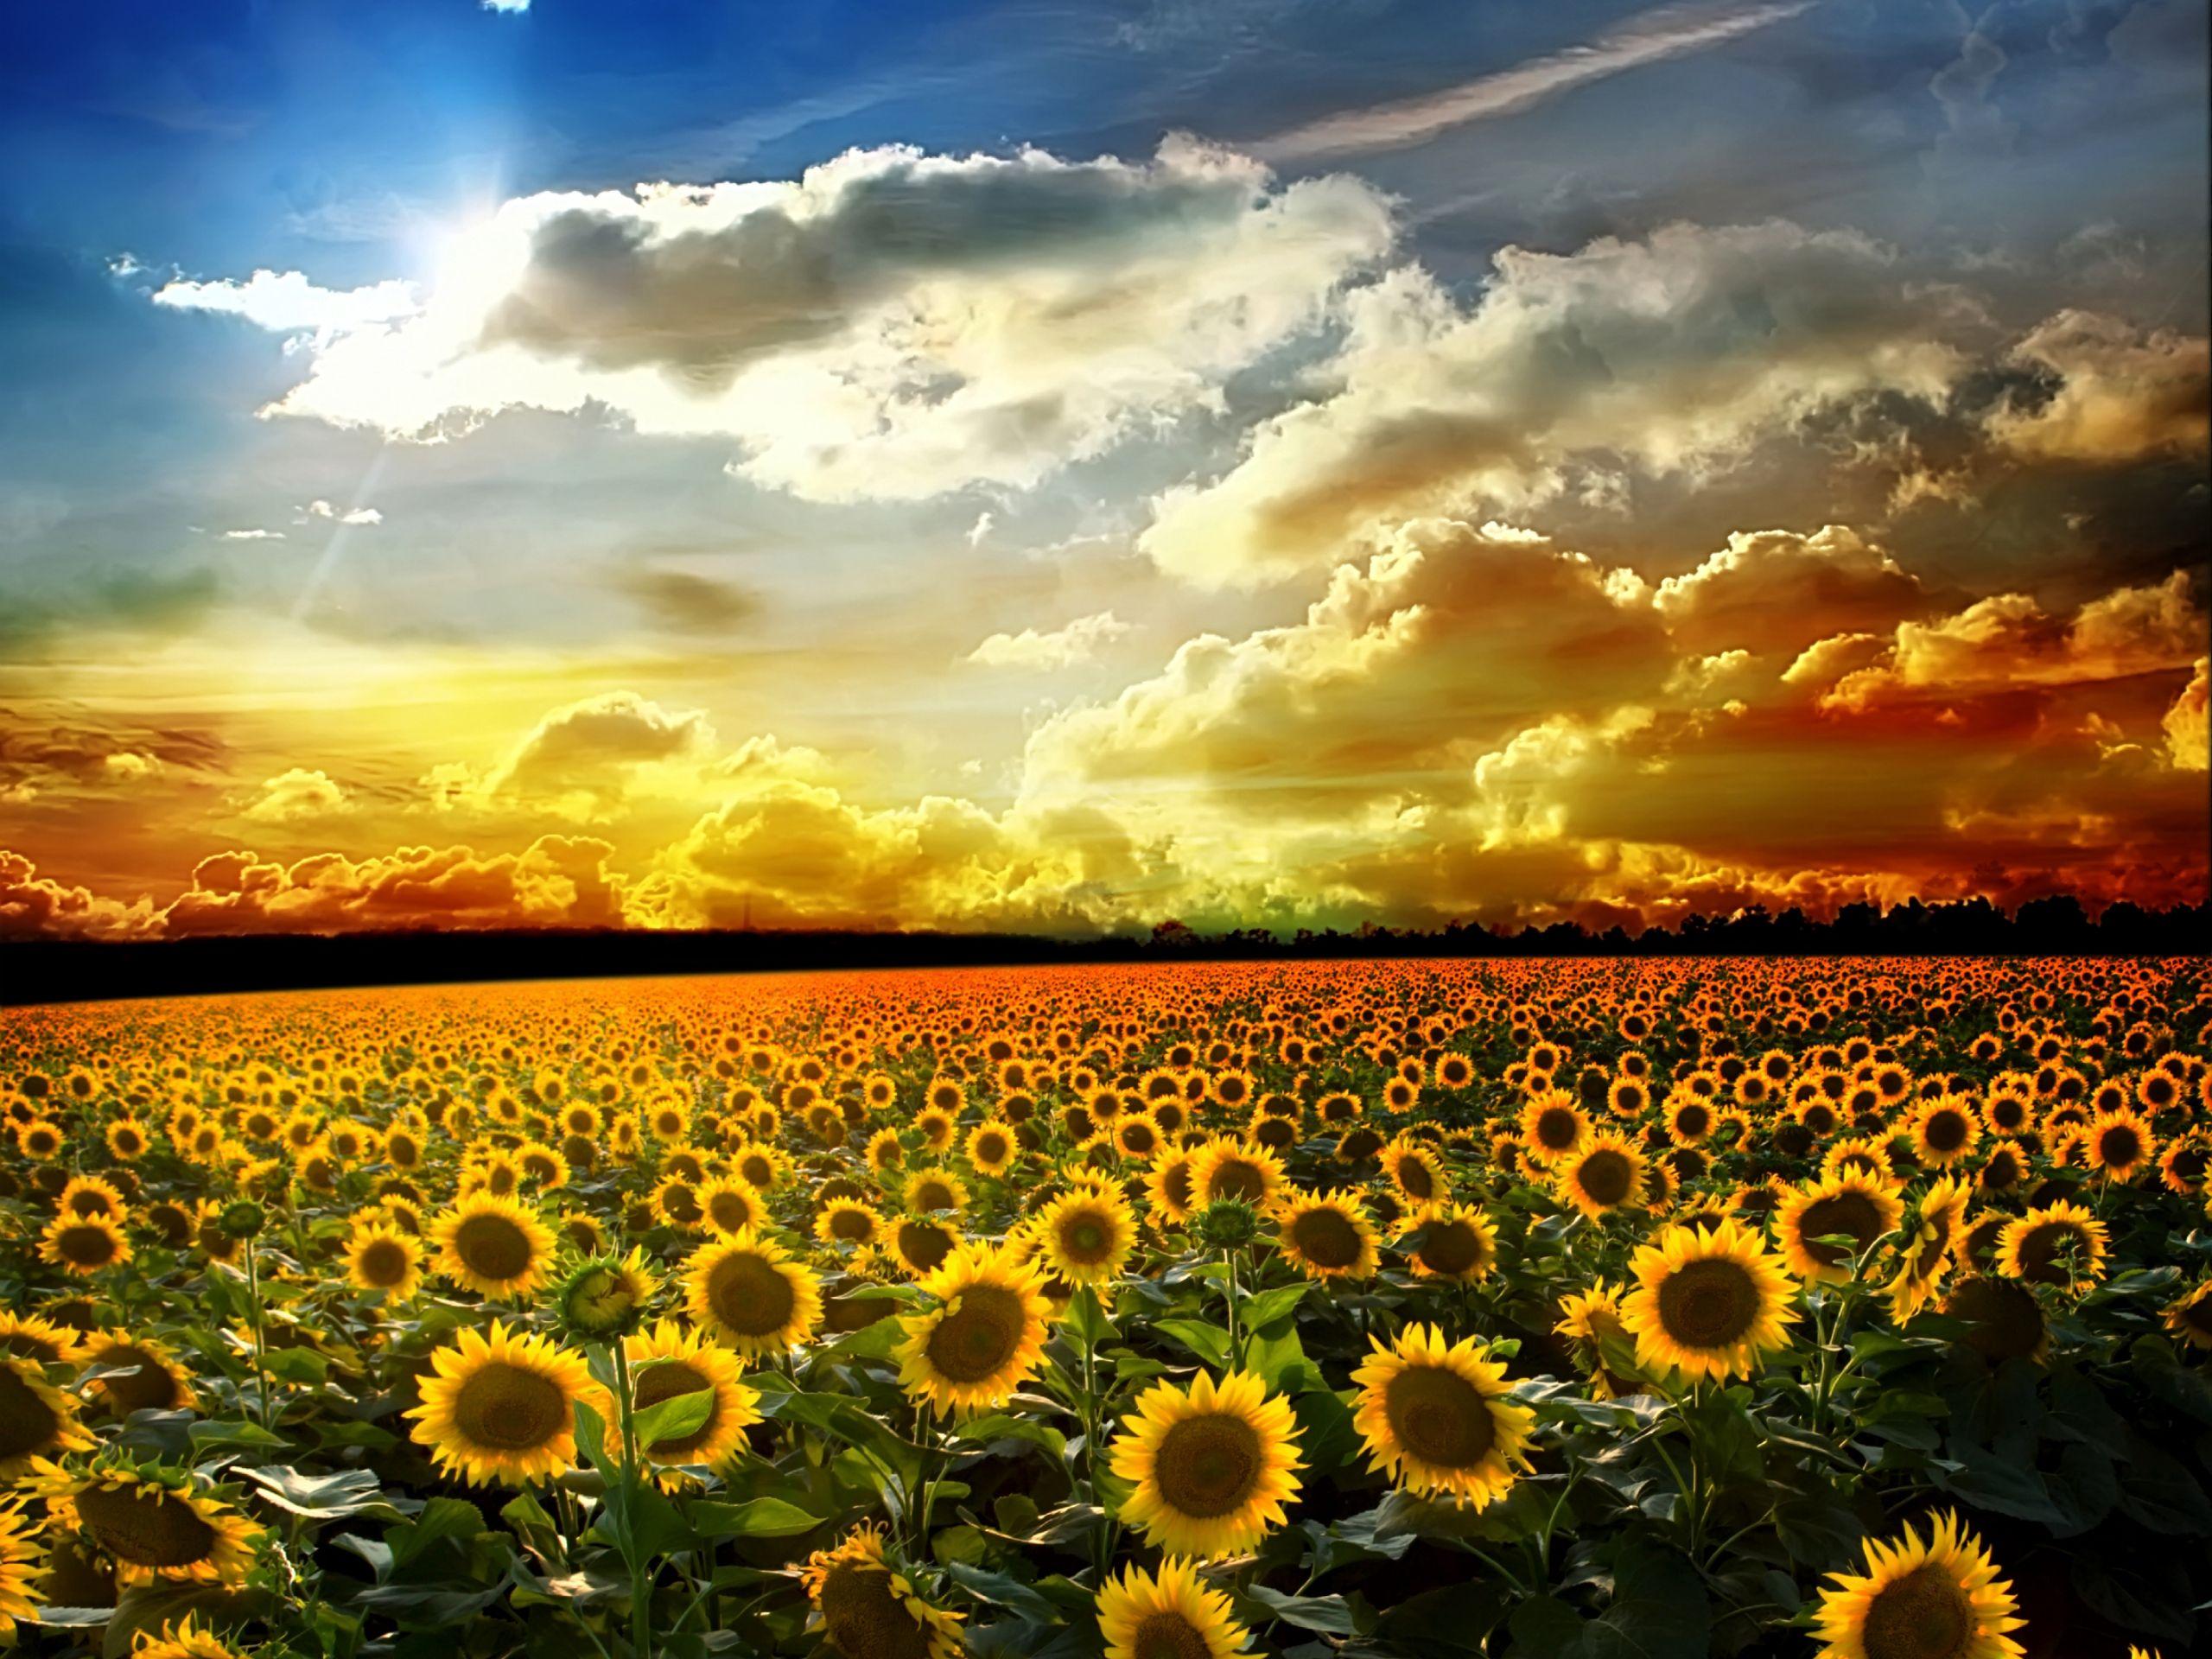 Sunflower Sunset Wallpaper Background For Desktop Wallpaper 2560 x